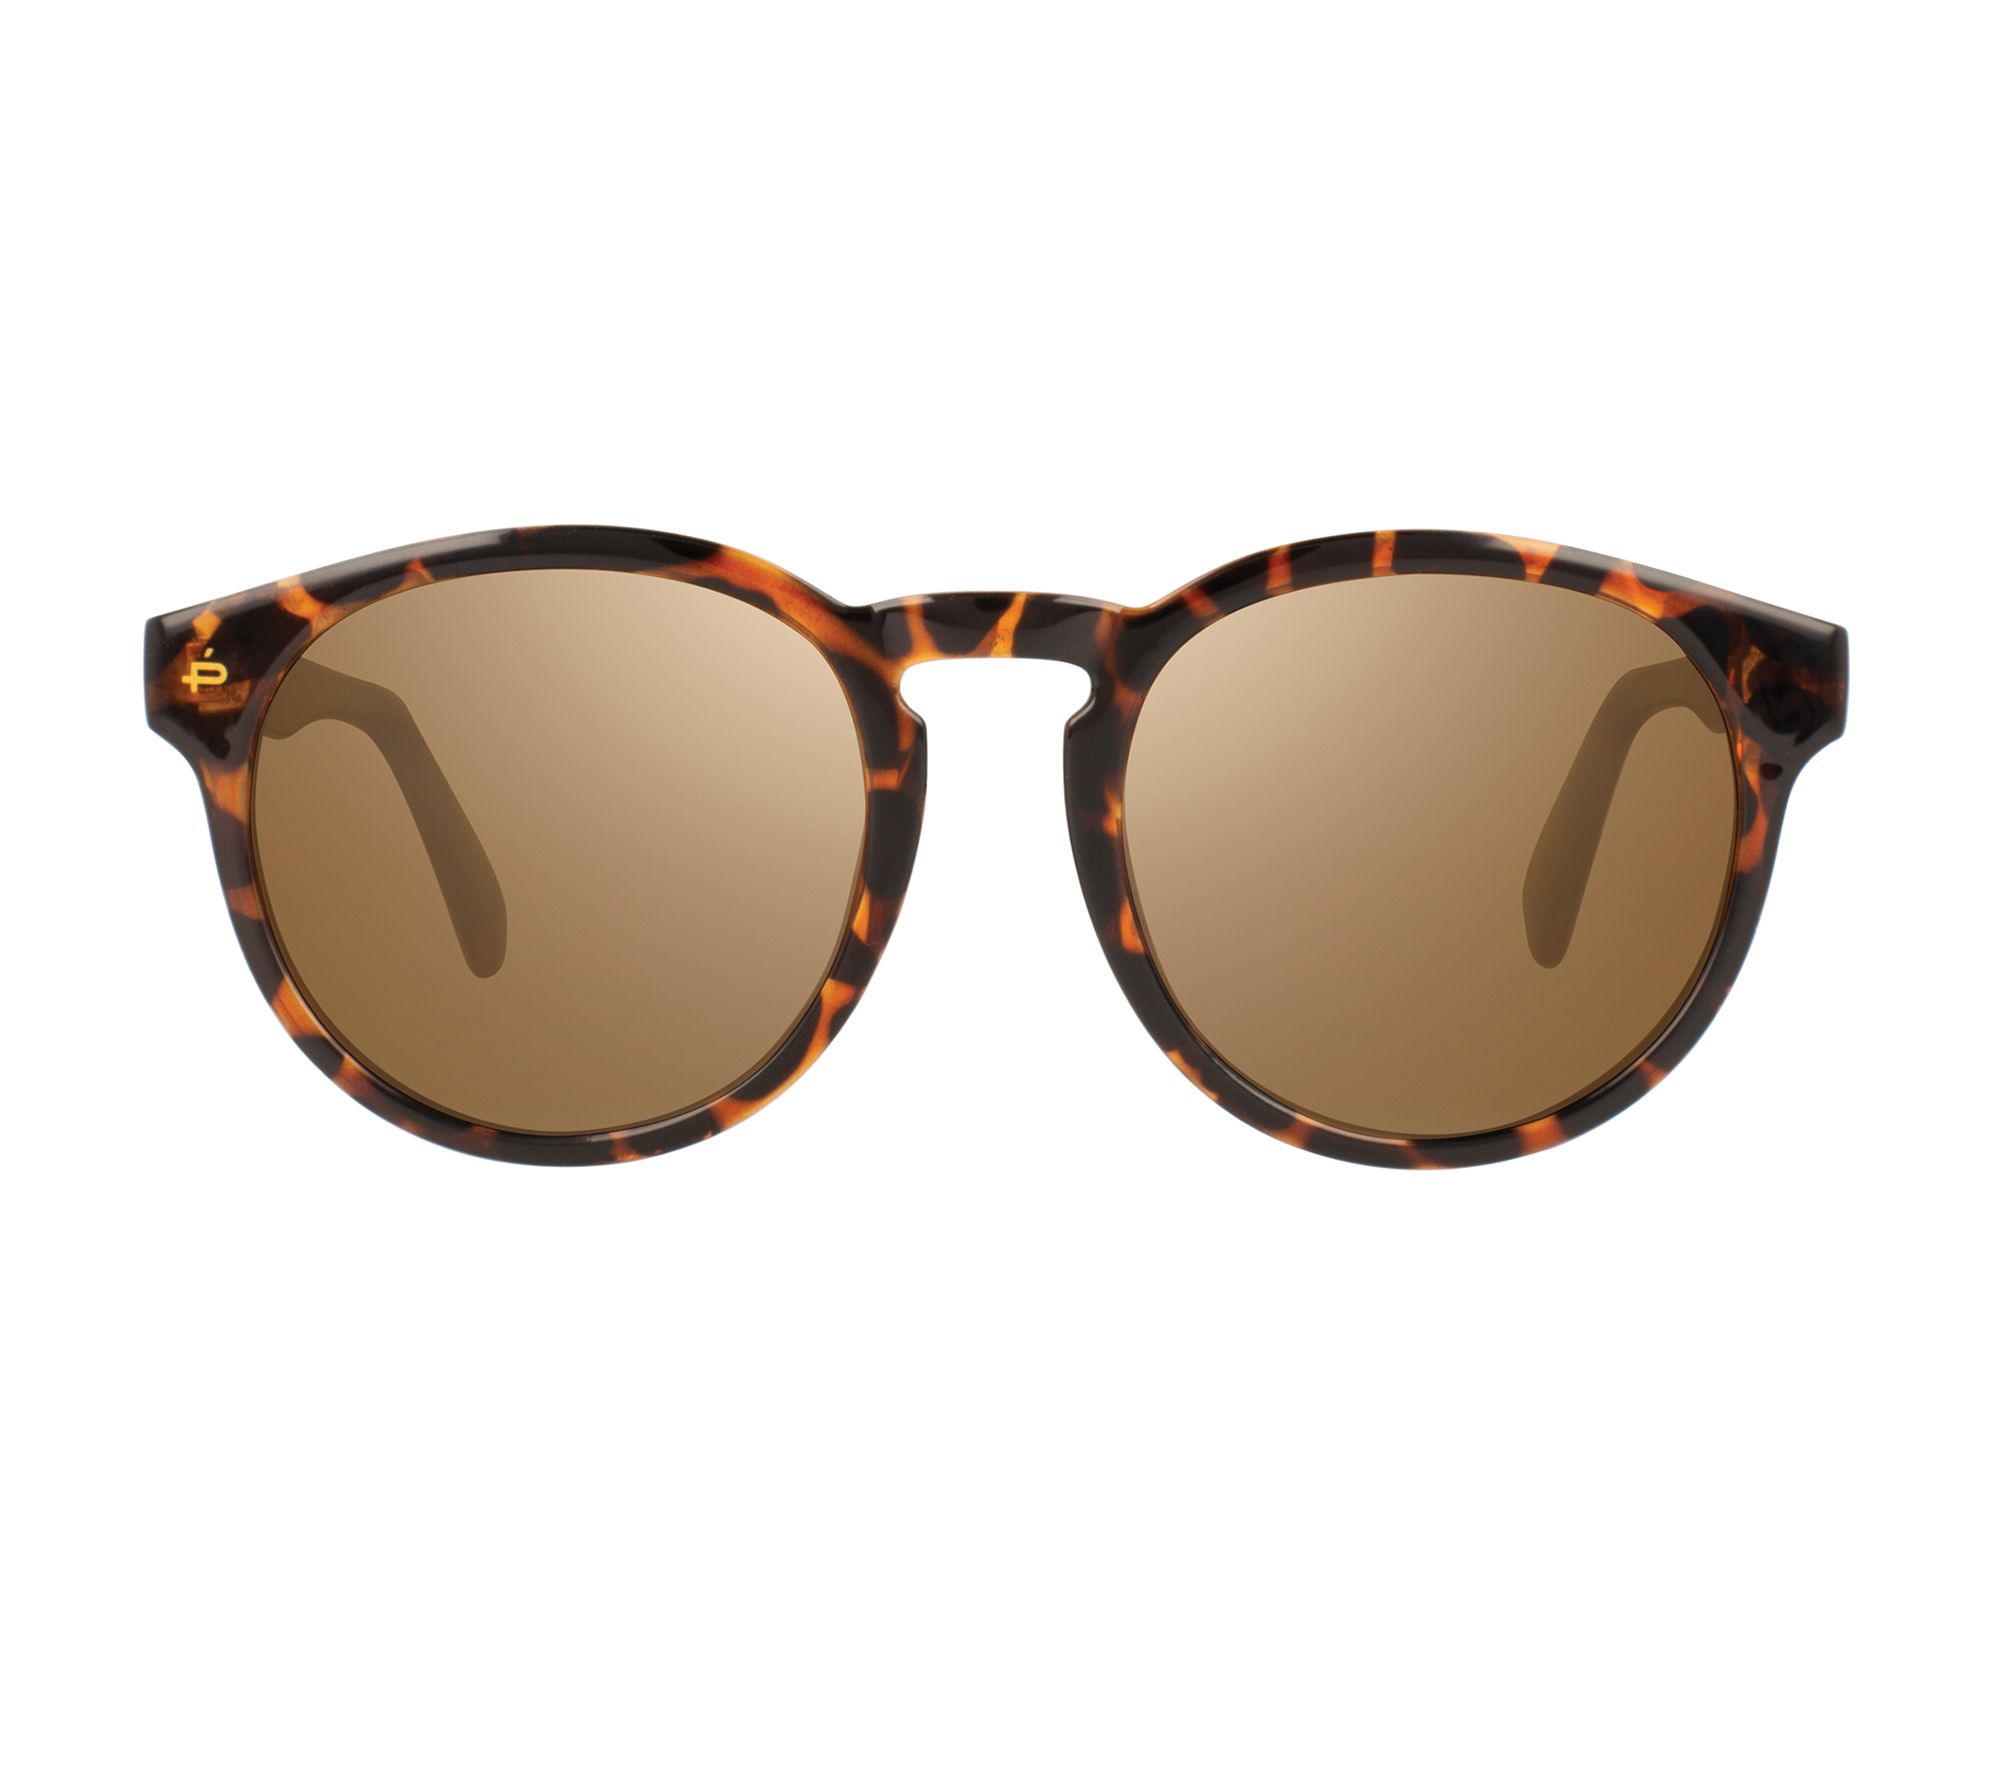 Prive Revaux St. Johns Polarized Sunglasses - QVC.com